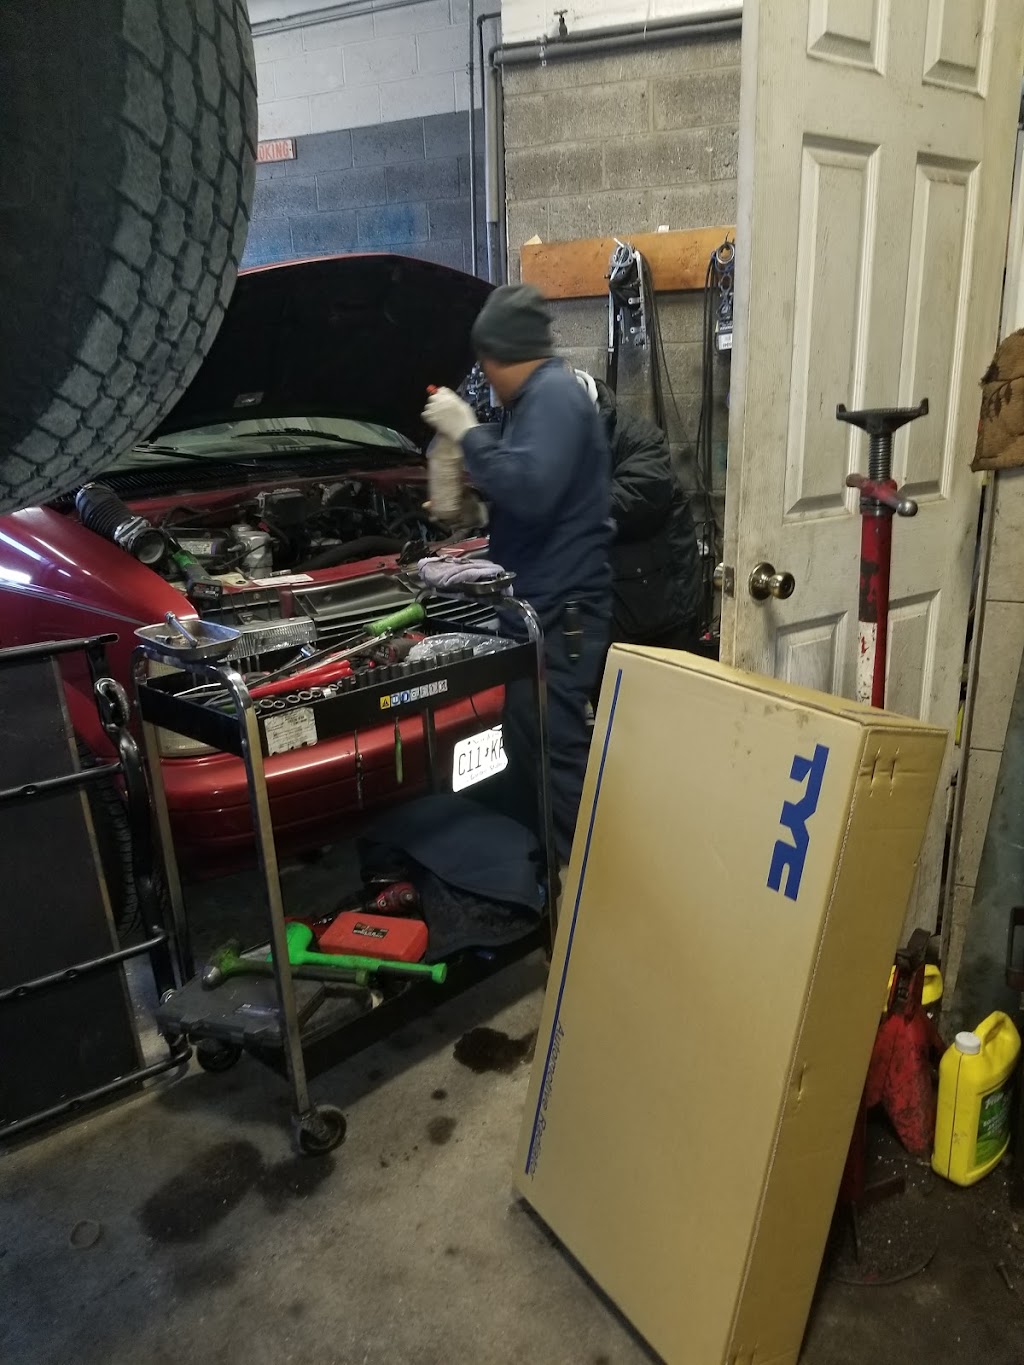 B and J Auto Repair | 105 71st St, Guttenberg, NJ 07093, USA | Phone: (201) 861-3373